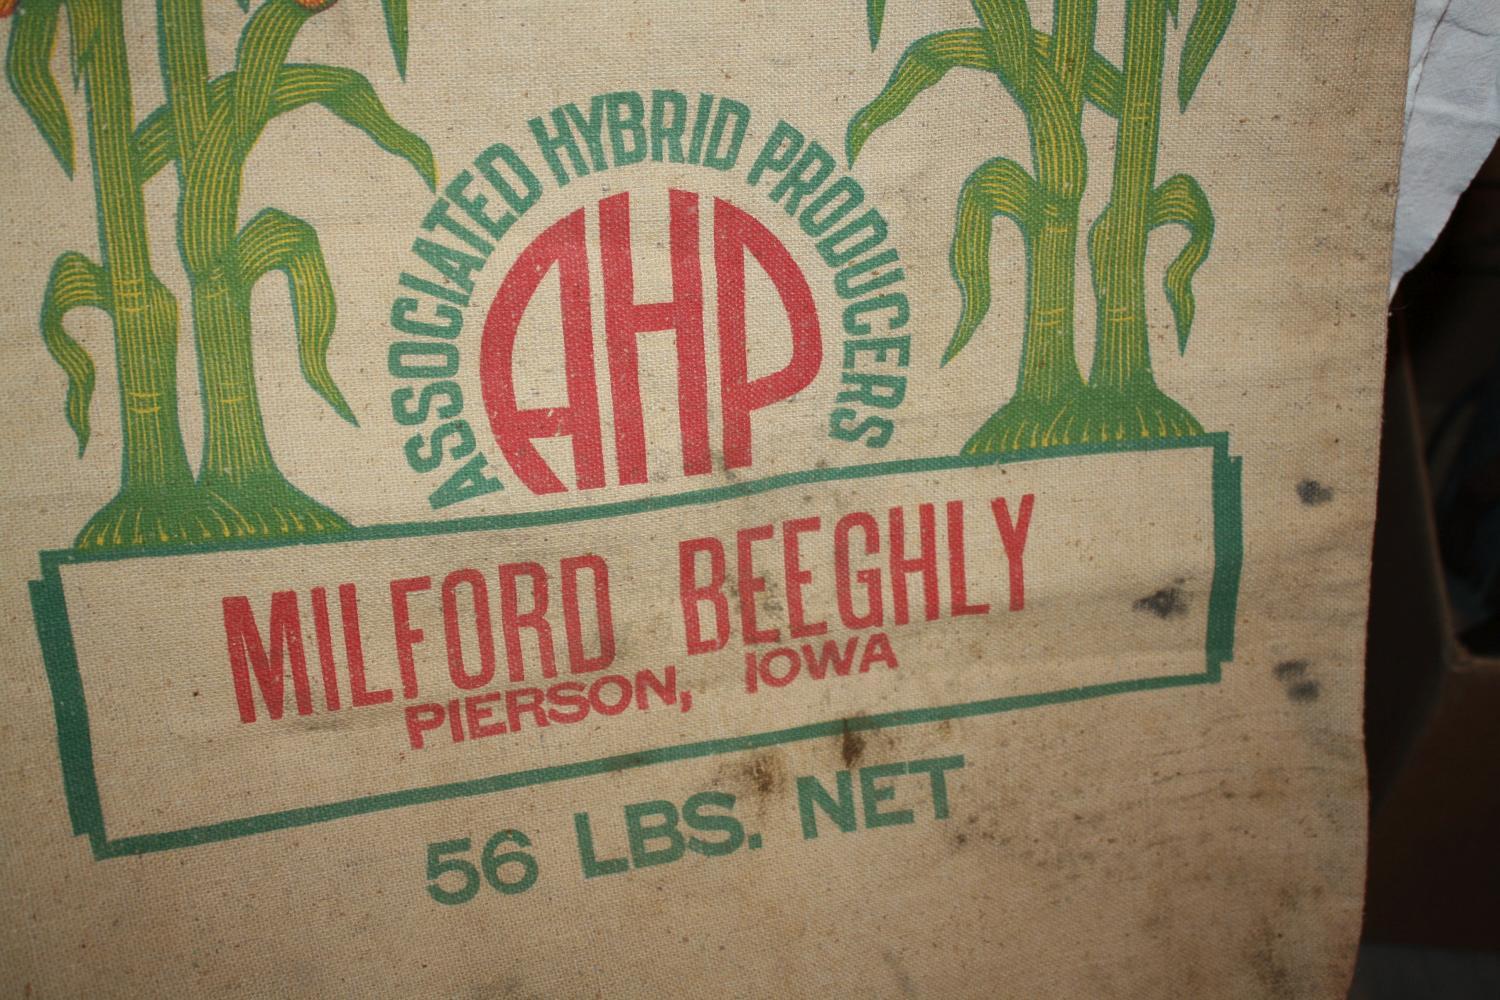 Beeghly's Hybrid Seed Corn Cloth Sack